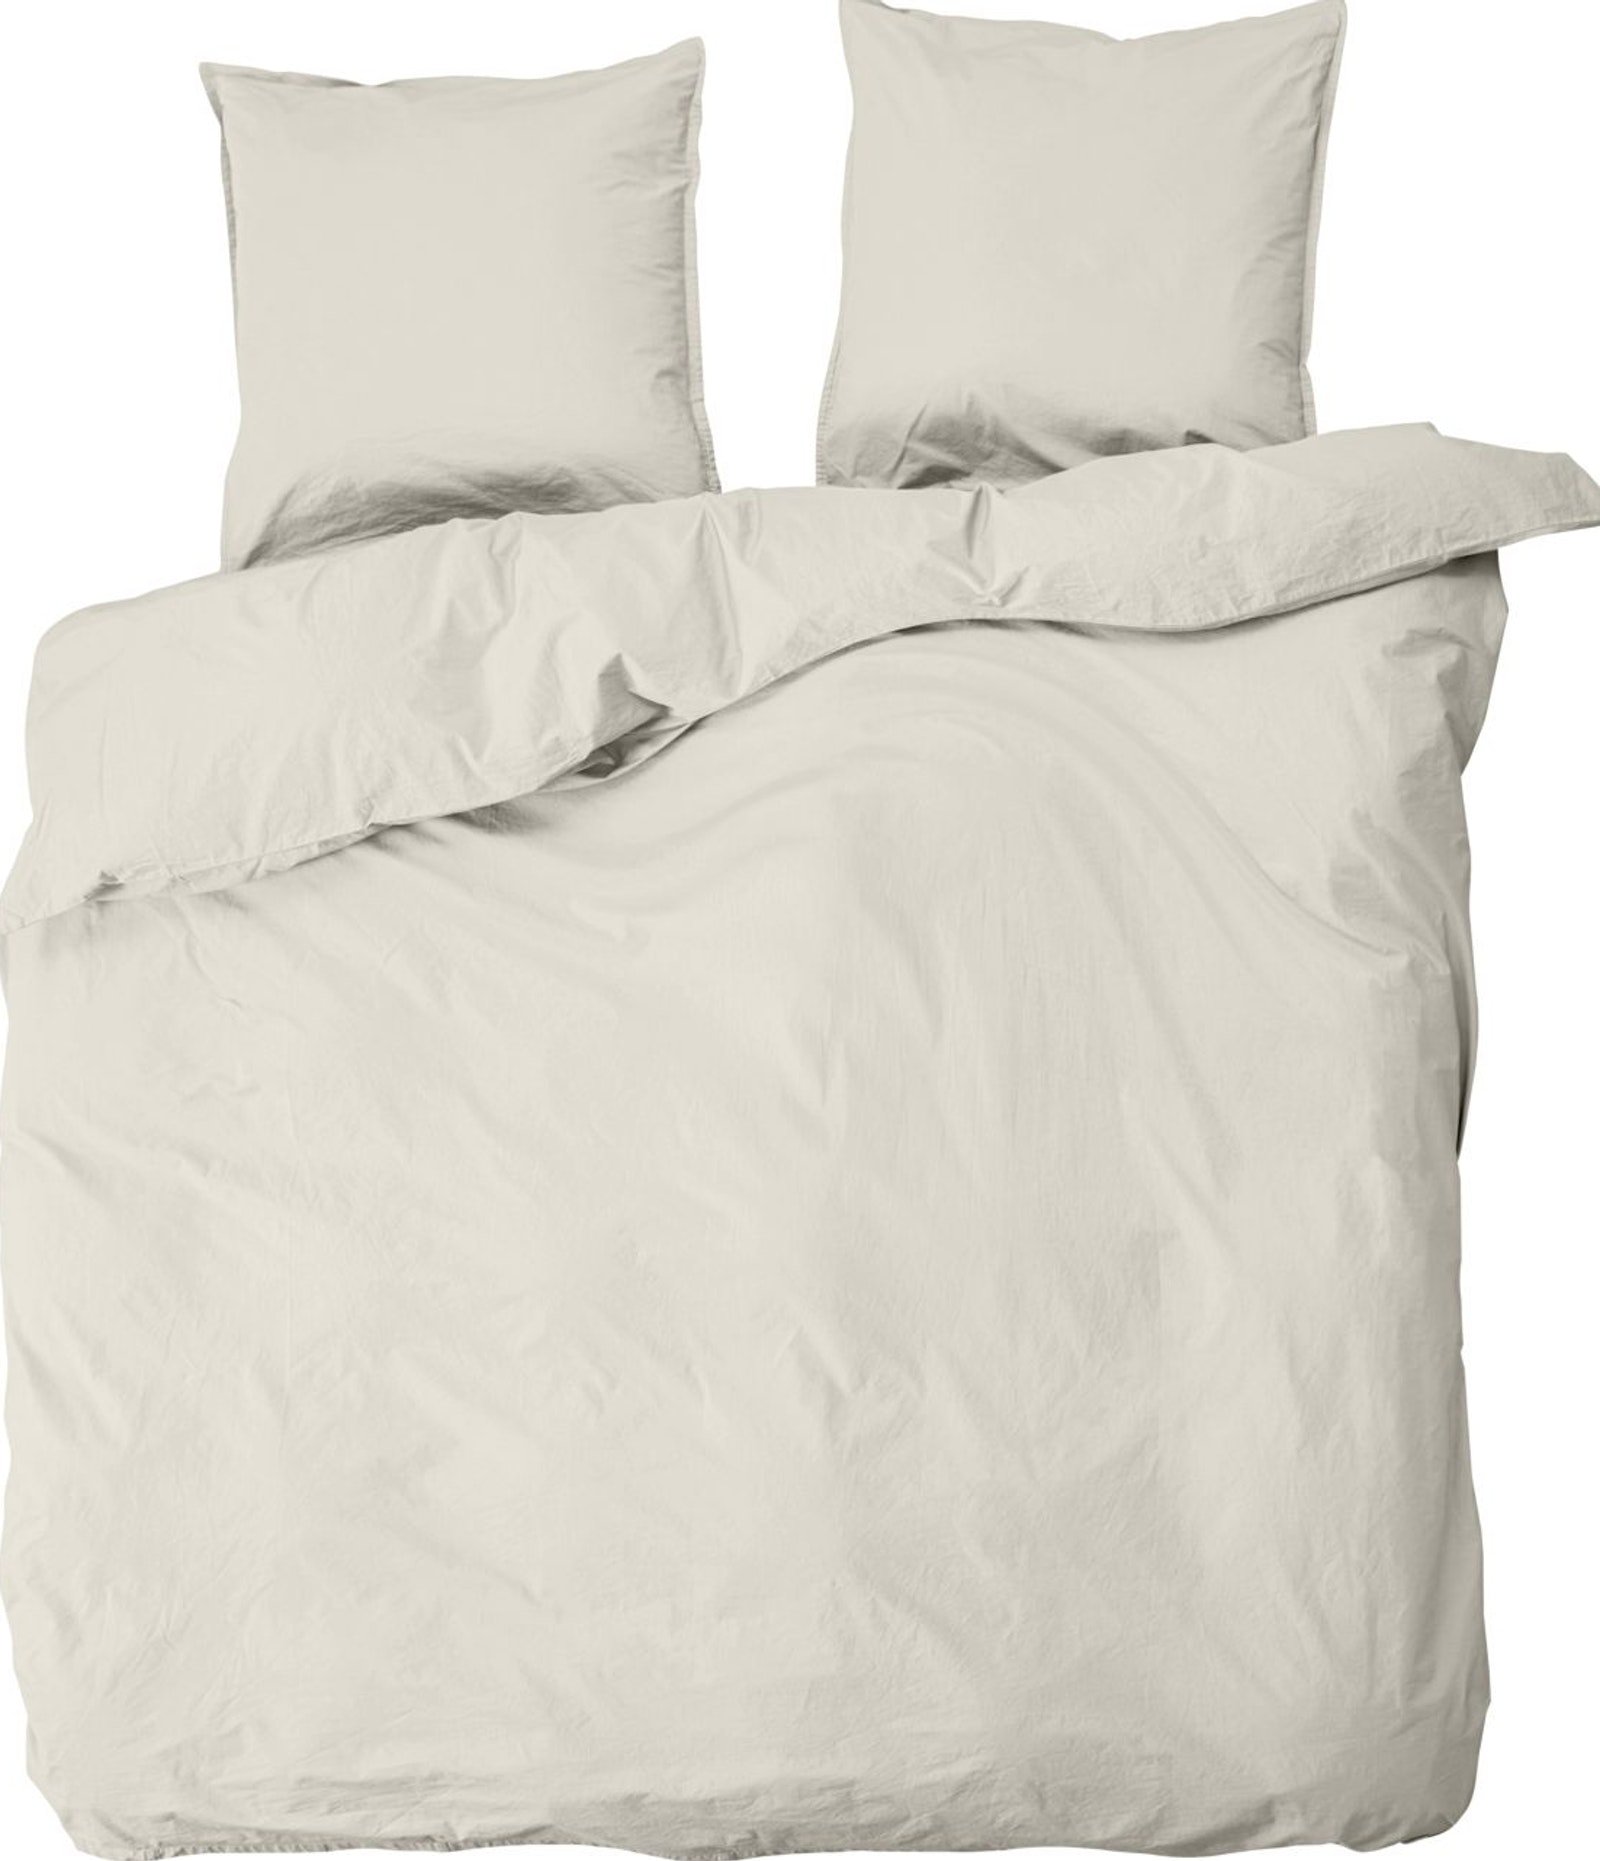 Ingrid, Dobbelt sengesæt, Økologisk bomuld by byNORD (B: 220 cm. x L: 220 cm., Shell)